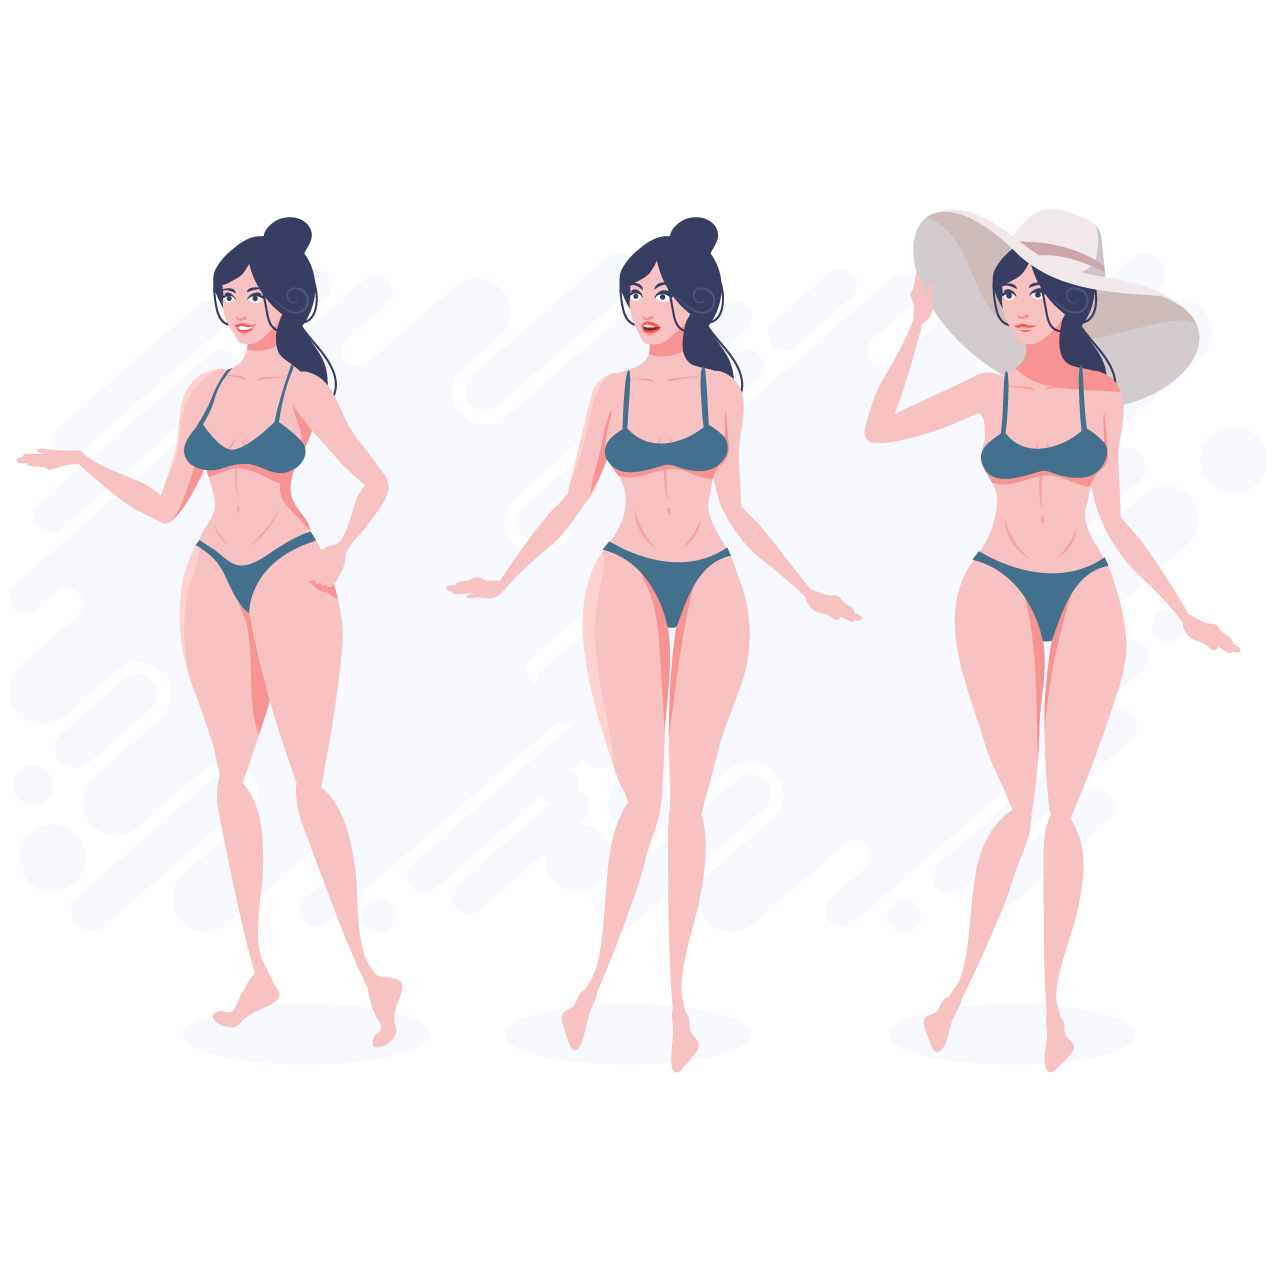 Bikini clipart girl with bun her head blue bikini three poses transparent background png